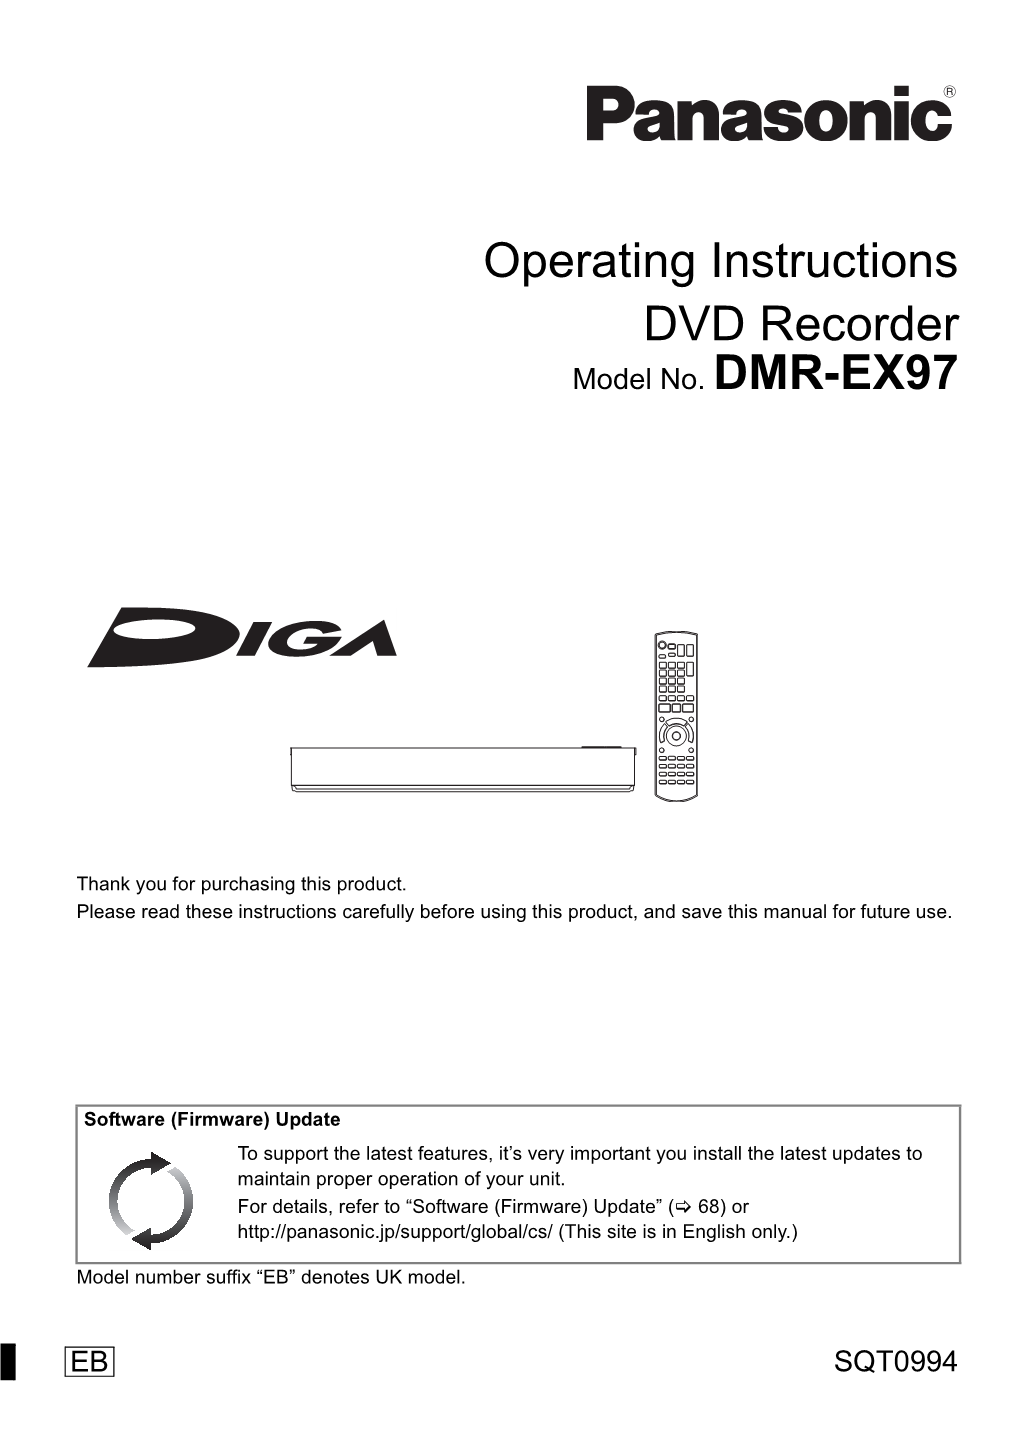 Operating Instructions DVD Recorder Model No